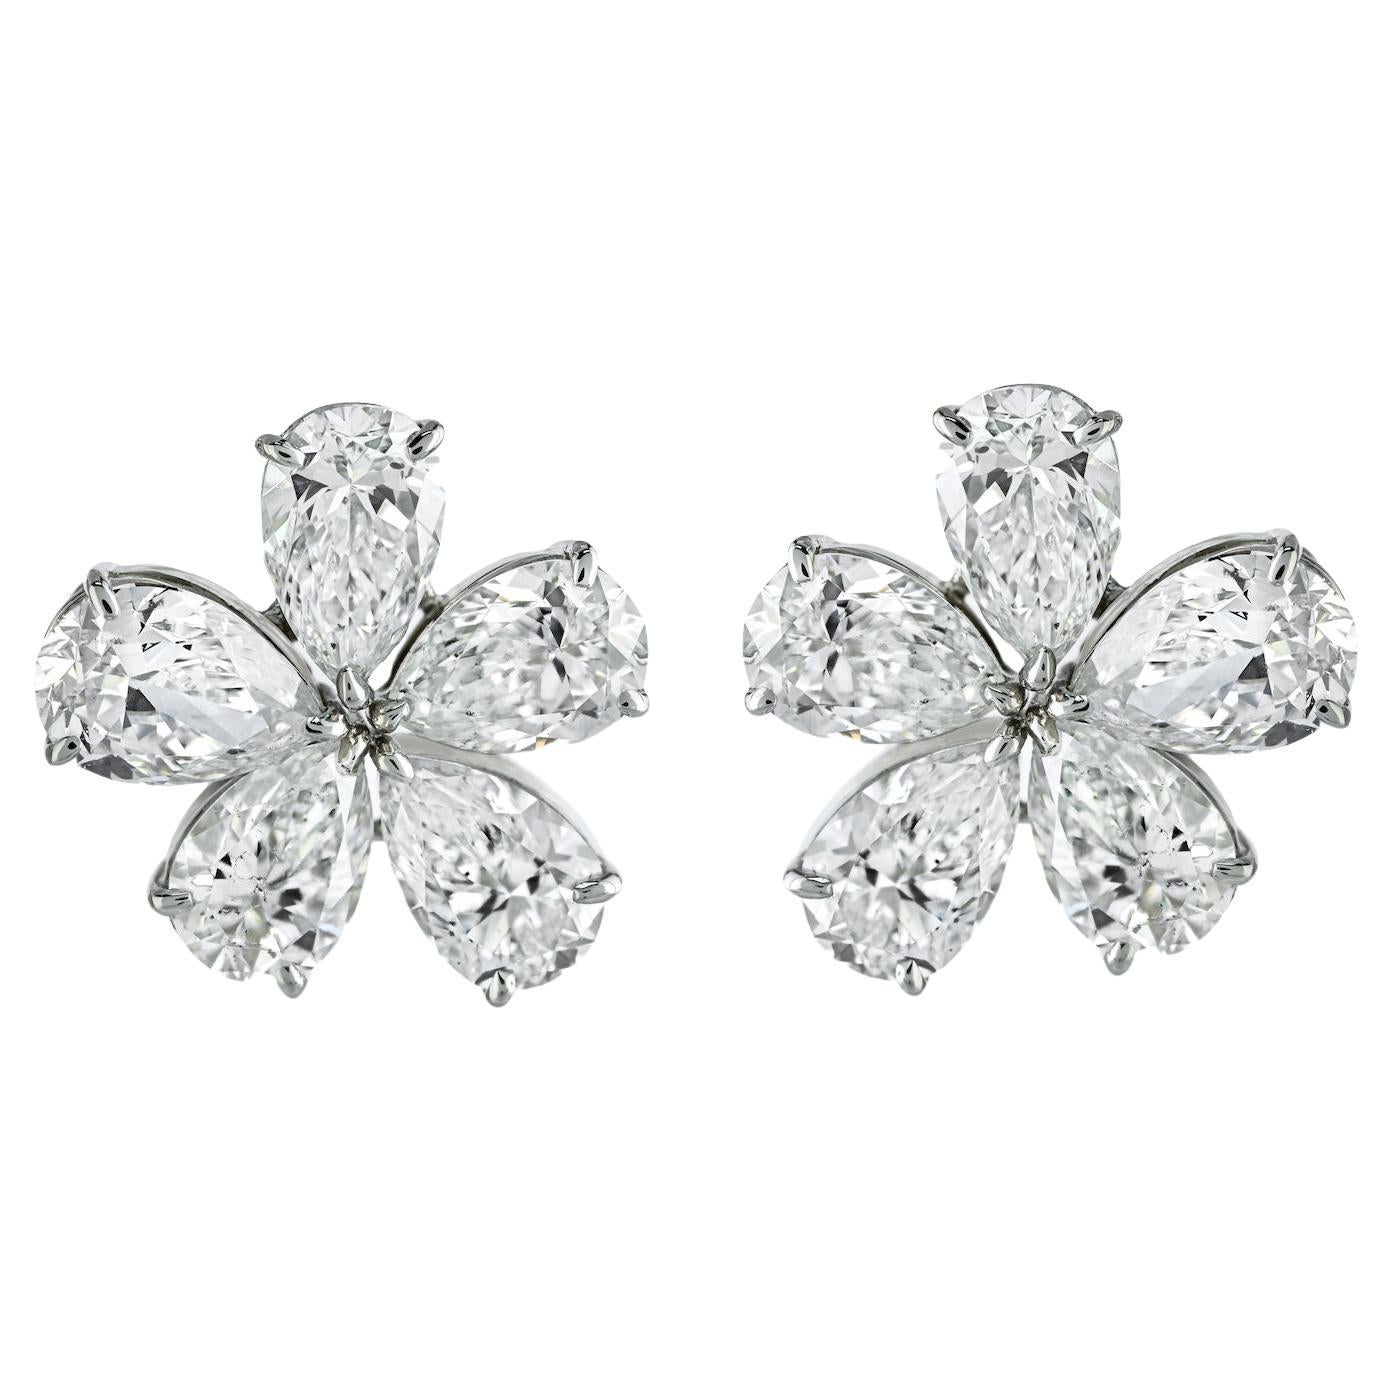 16cttw Pear Cut GIA Certified D-E color Diamond Flower Stud Earrings For Sale